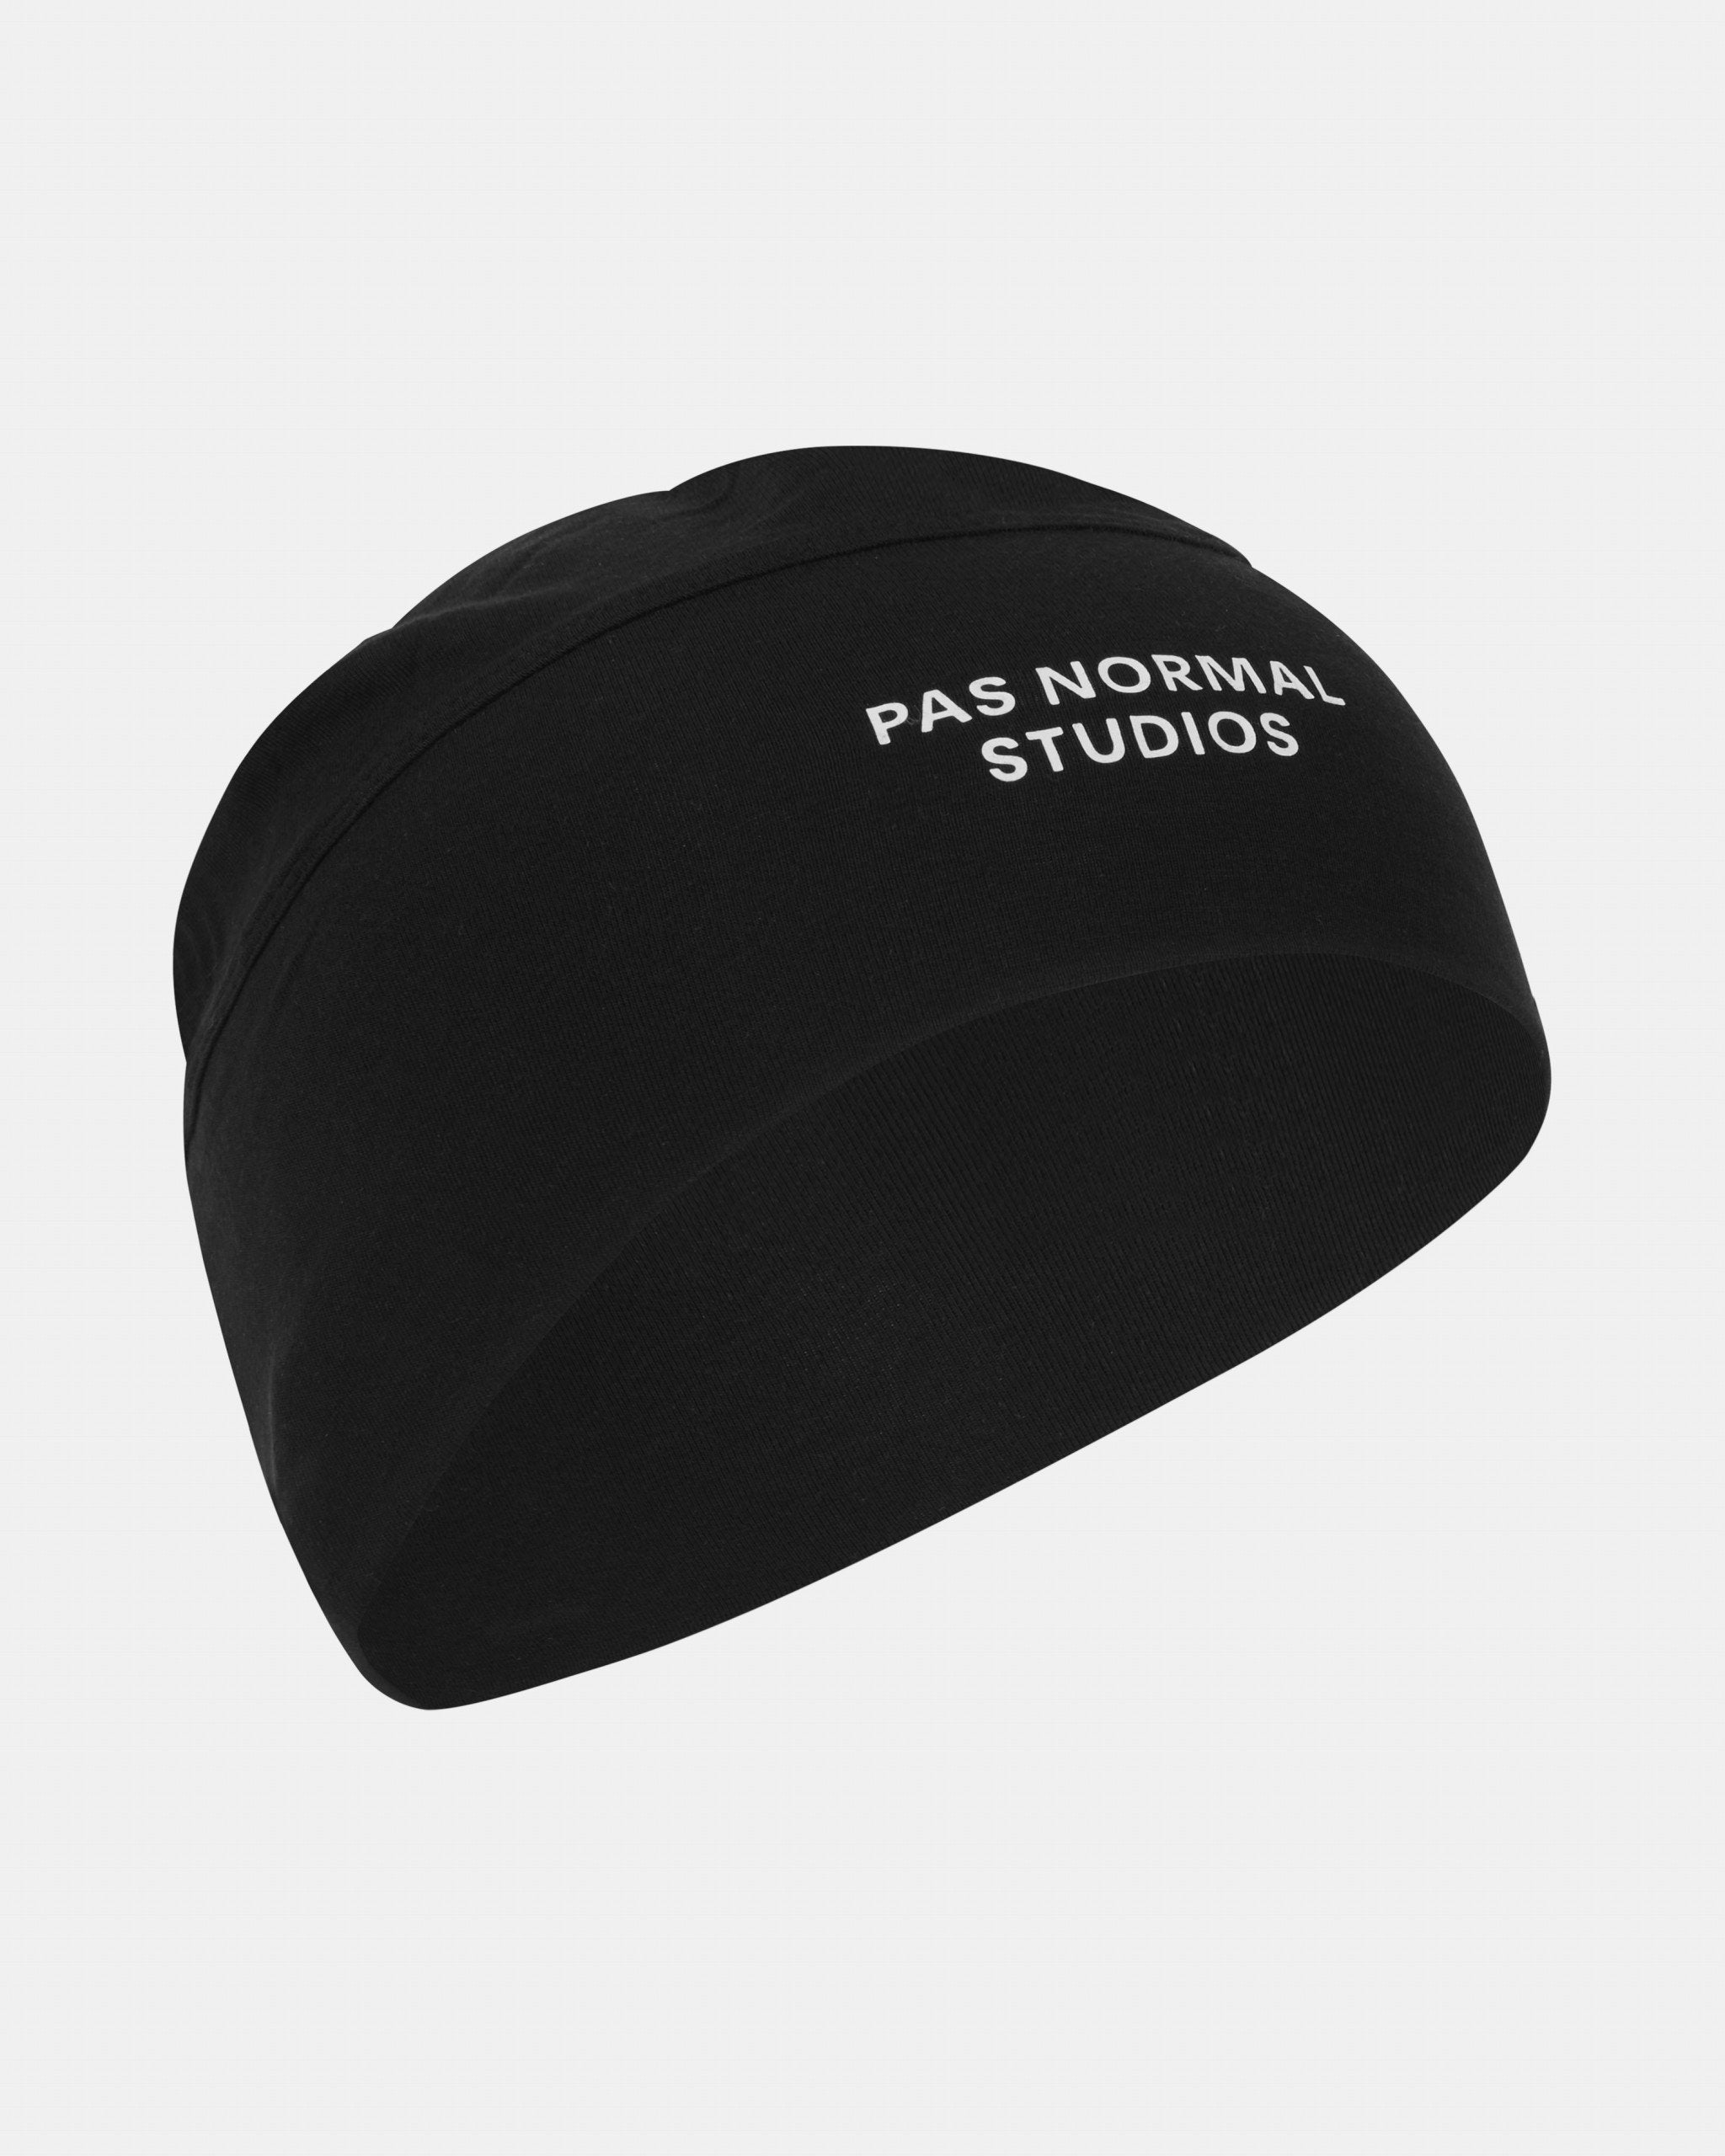 Pas Normal Studios Logo Thermal Necktube, Neck Warmer